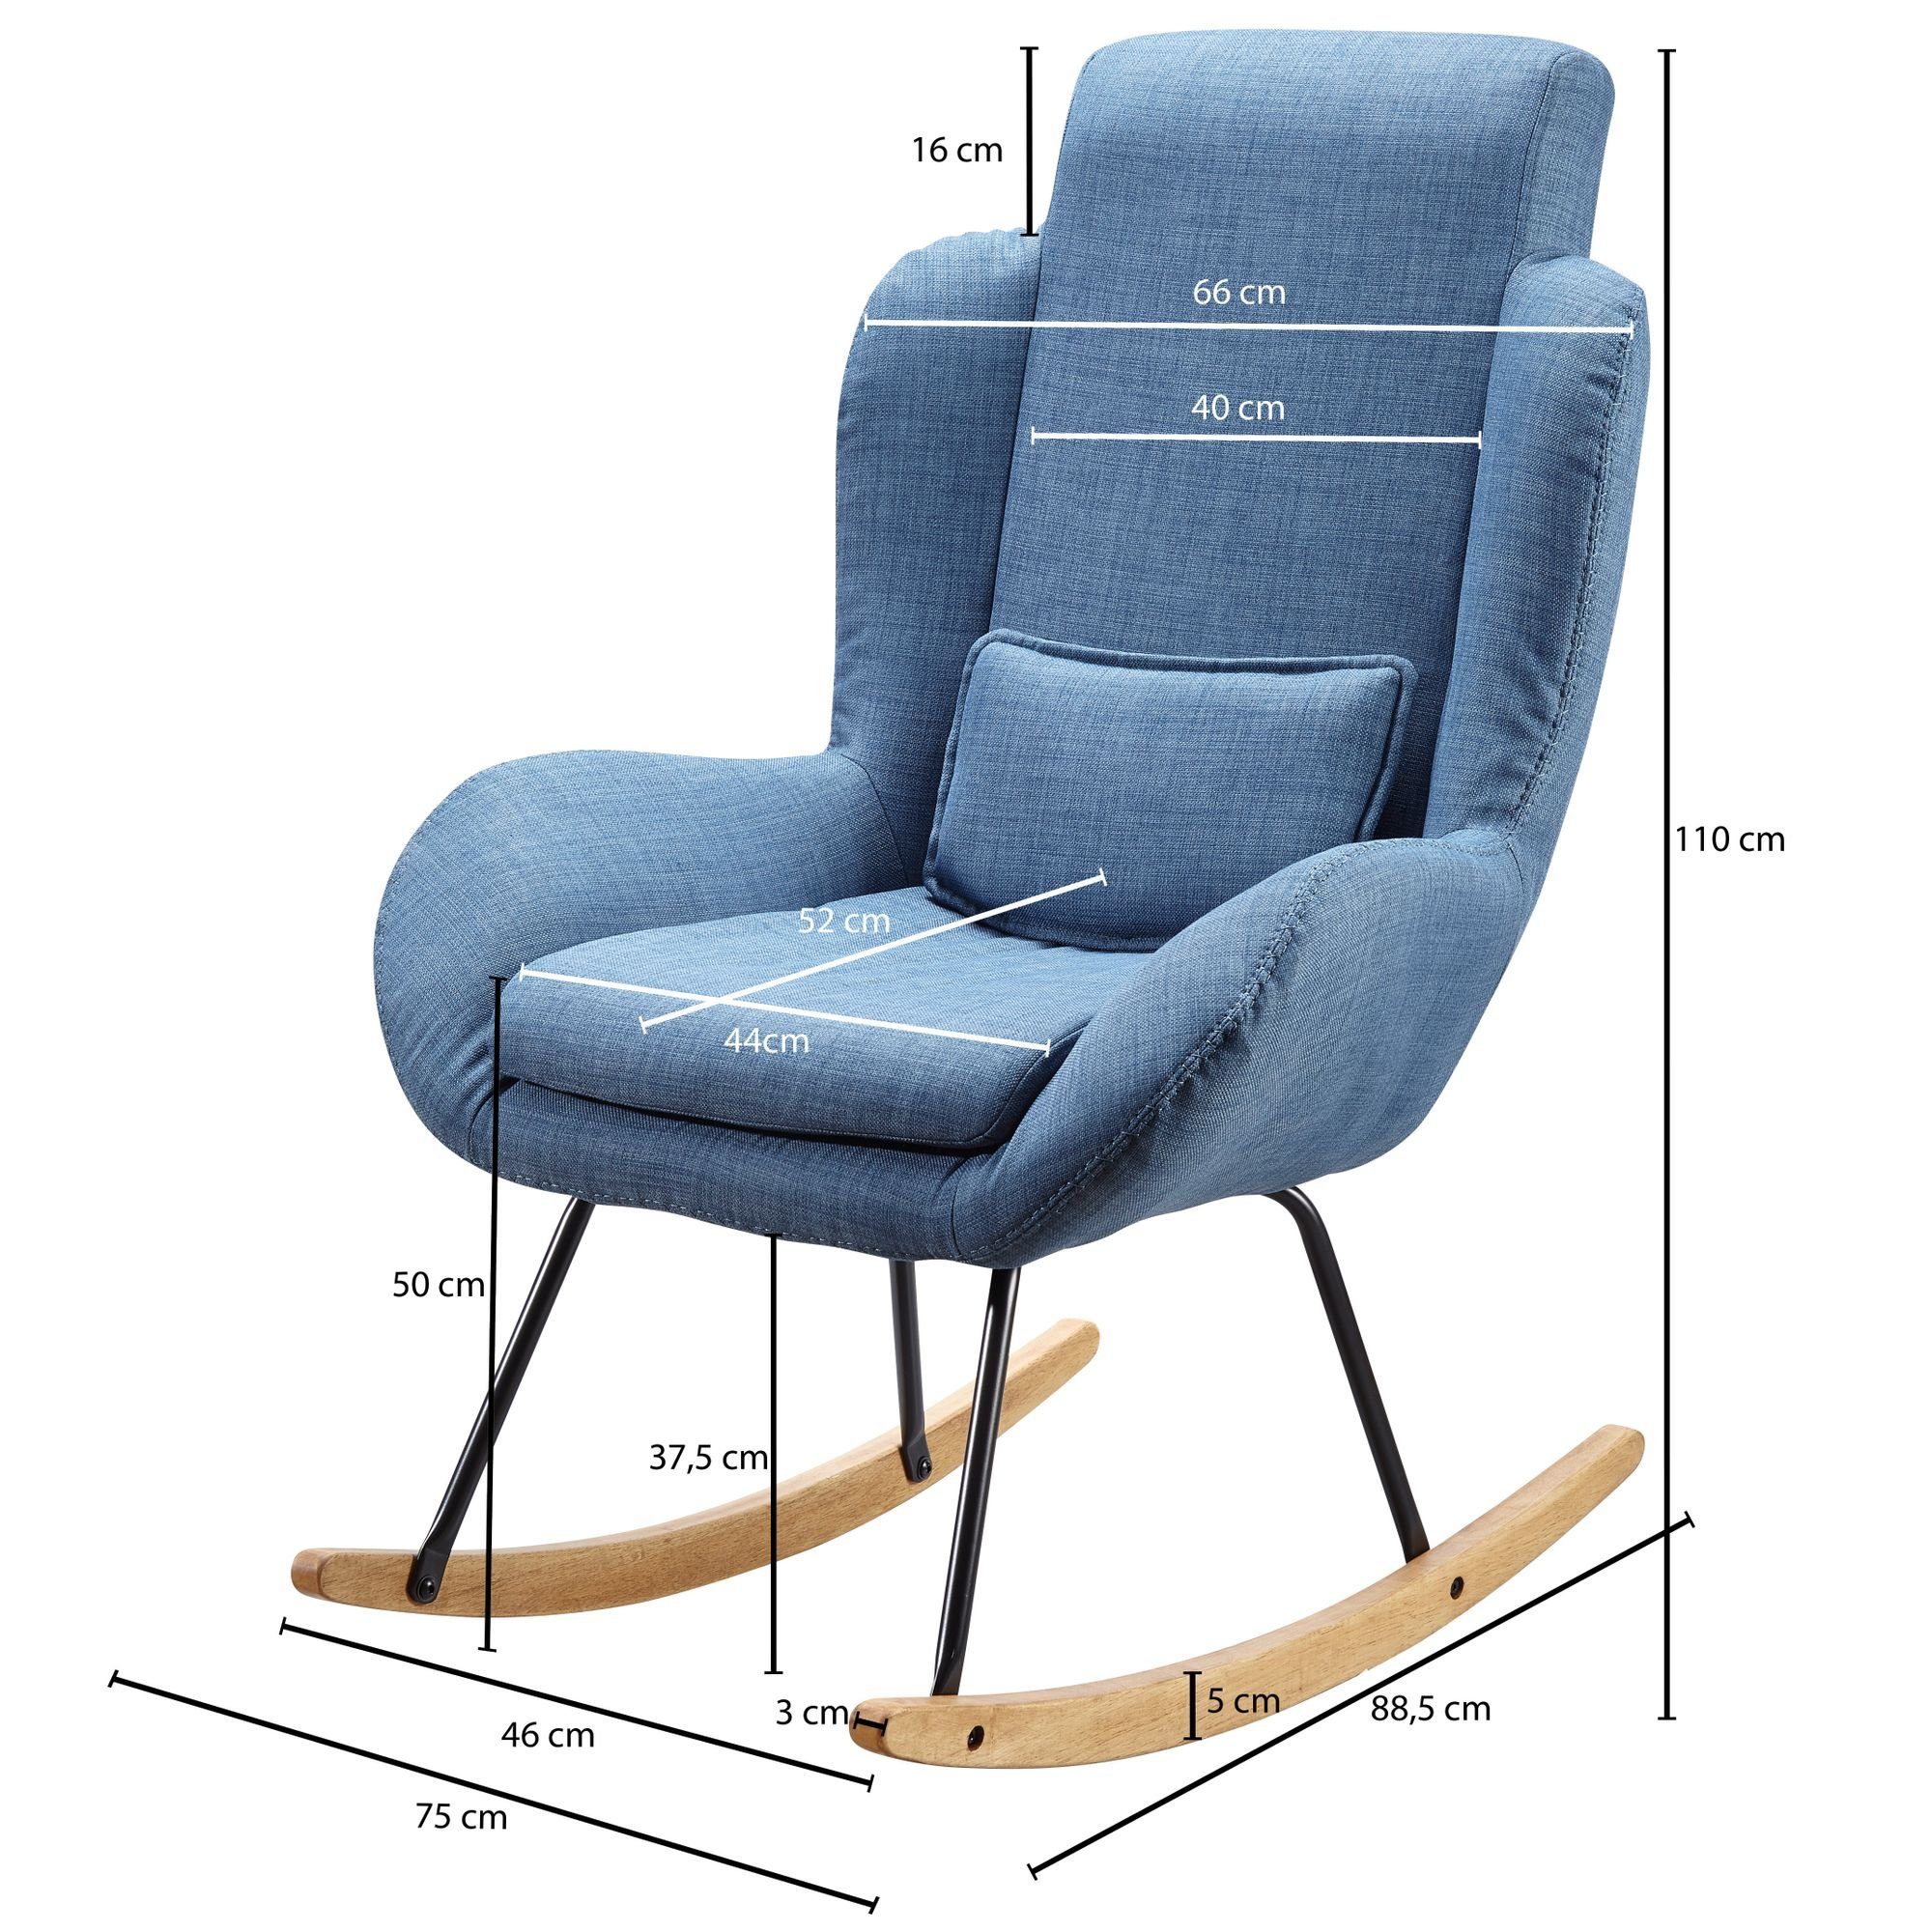 x x 110 88,5 Relaxsessel Schaukelsessel Schwingstuhl Stoff Relaxstuhl, WL5.800 Schwingsessel Moderner Blau, (CAPRI 75 cm), Wohnling